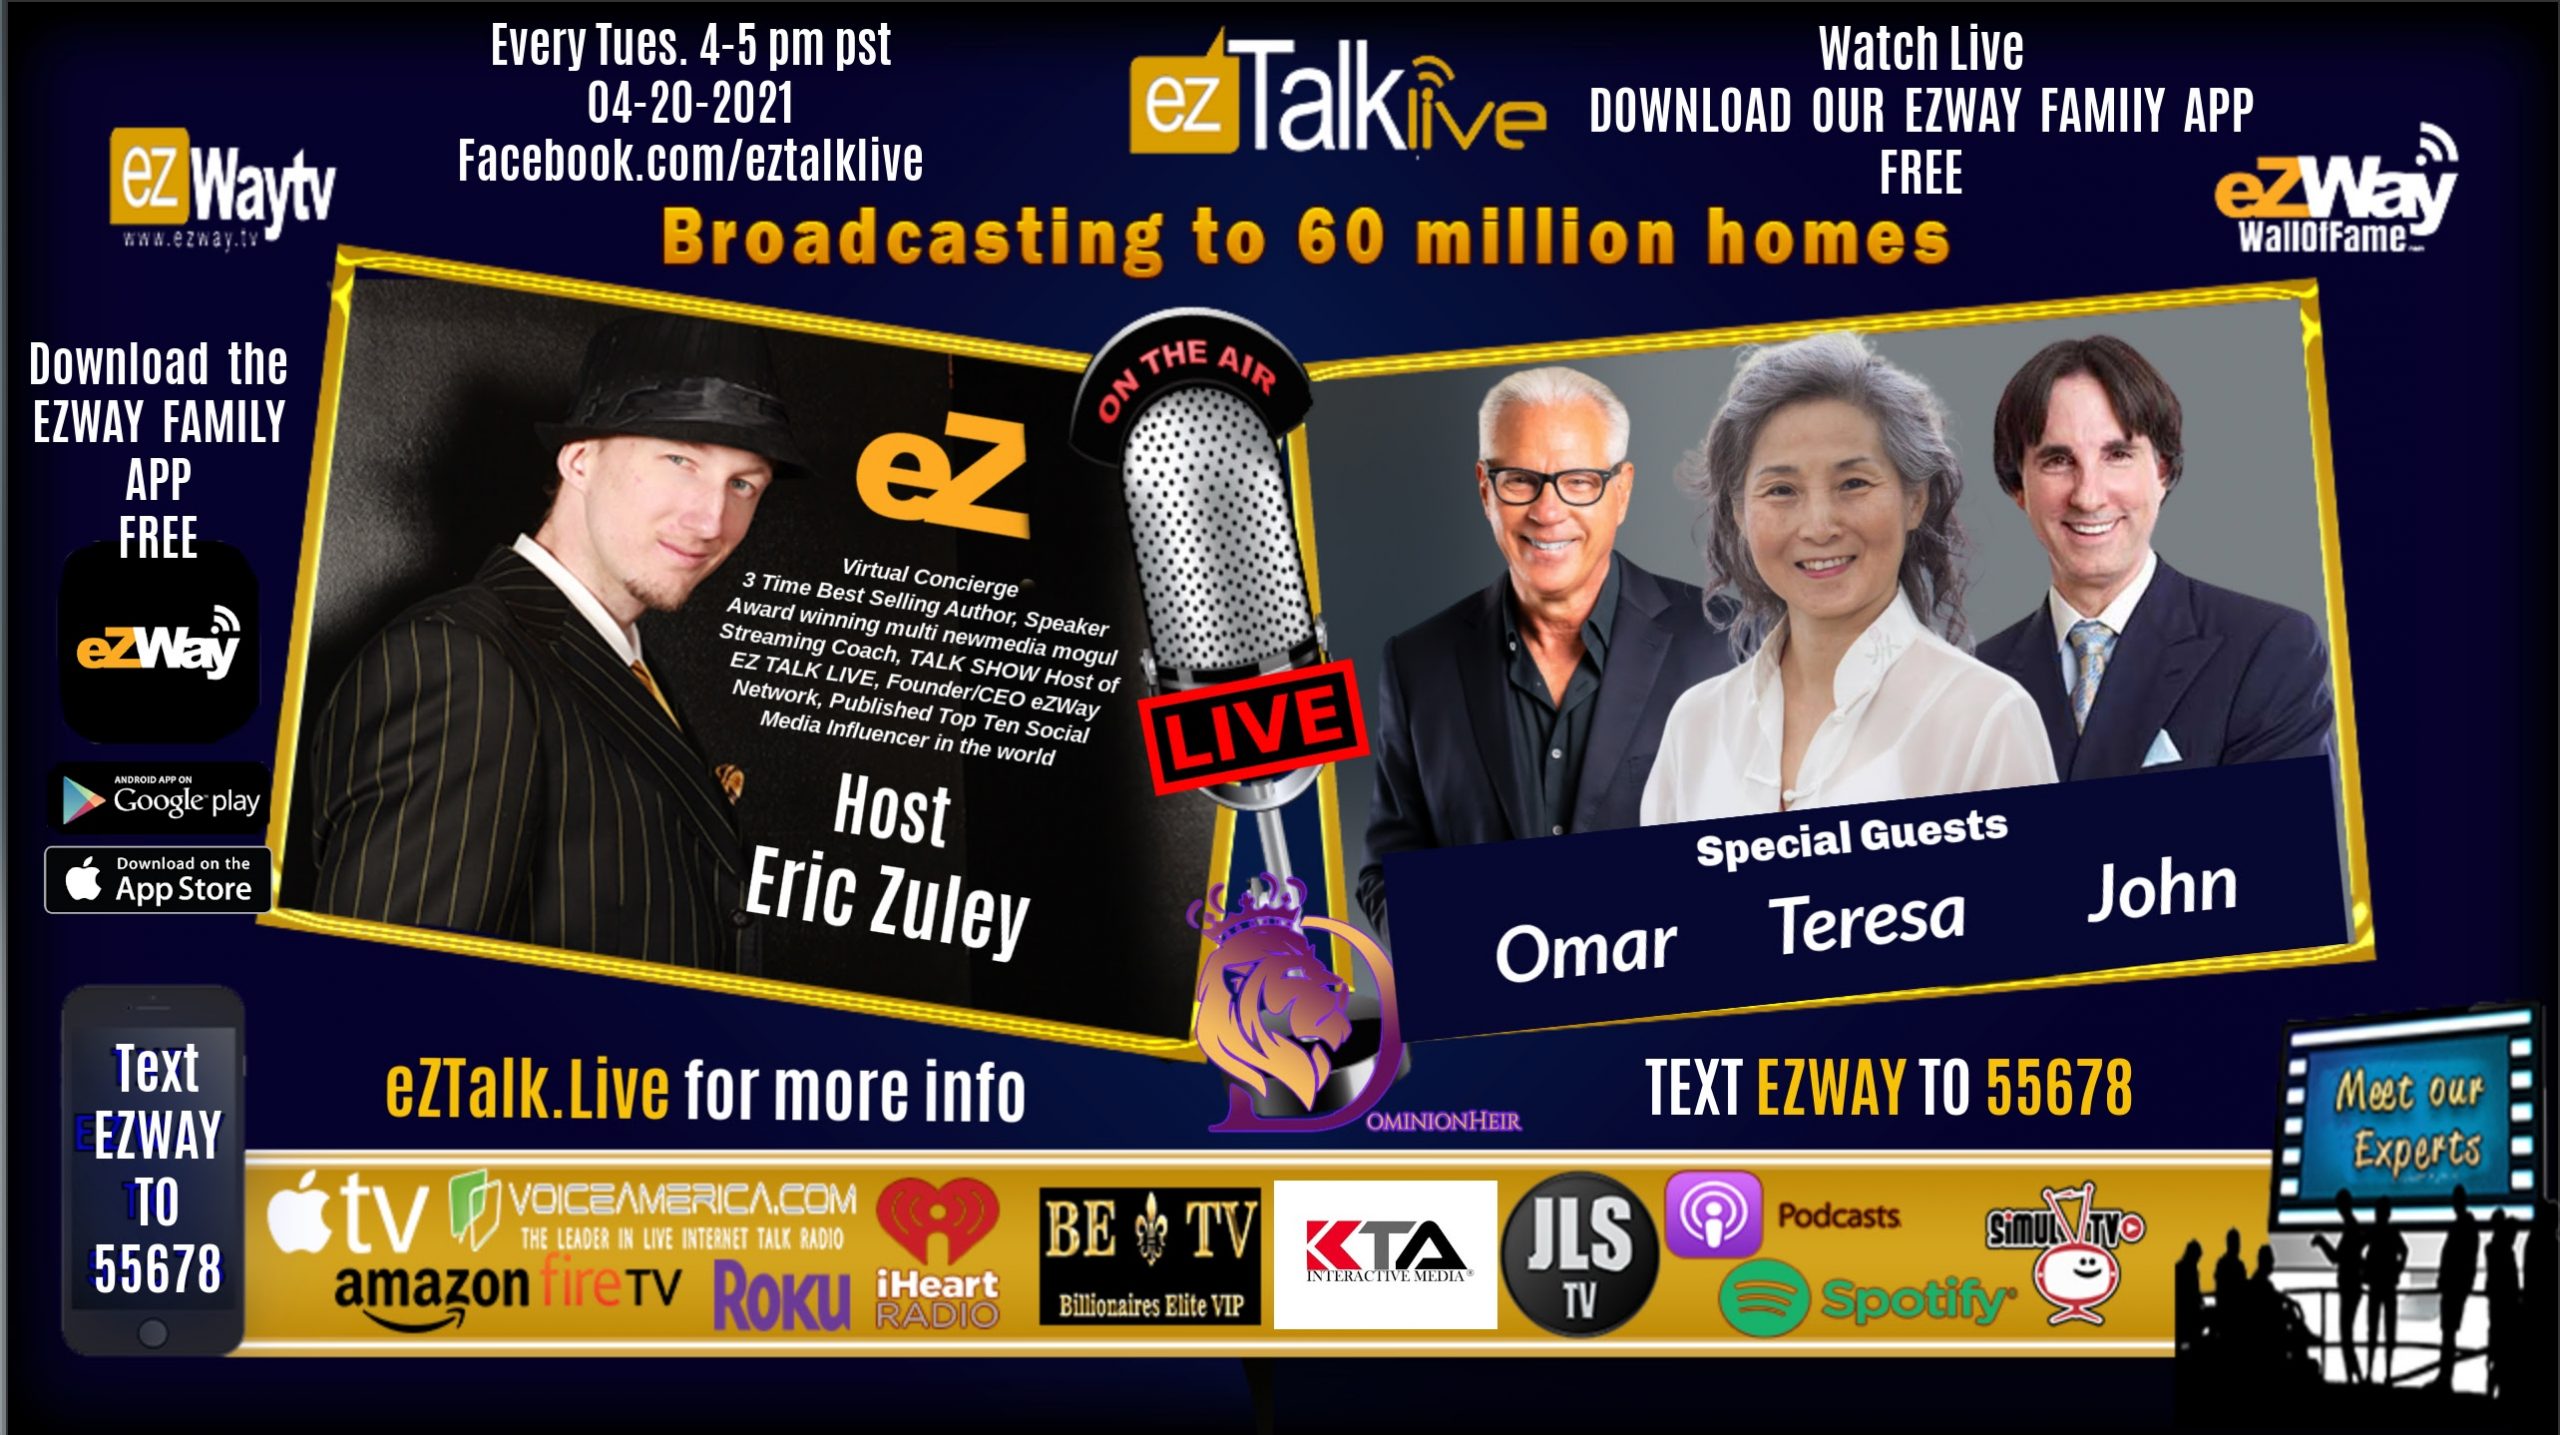 EZ TALK LIVE with Eric Zuley Feat Omar Periu, John Demartini, Master Teresa Yeung